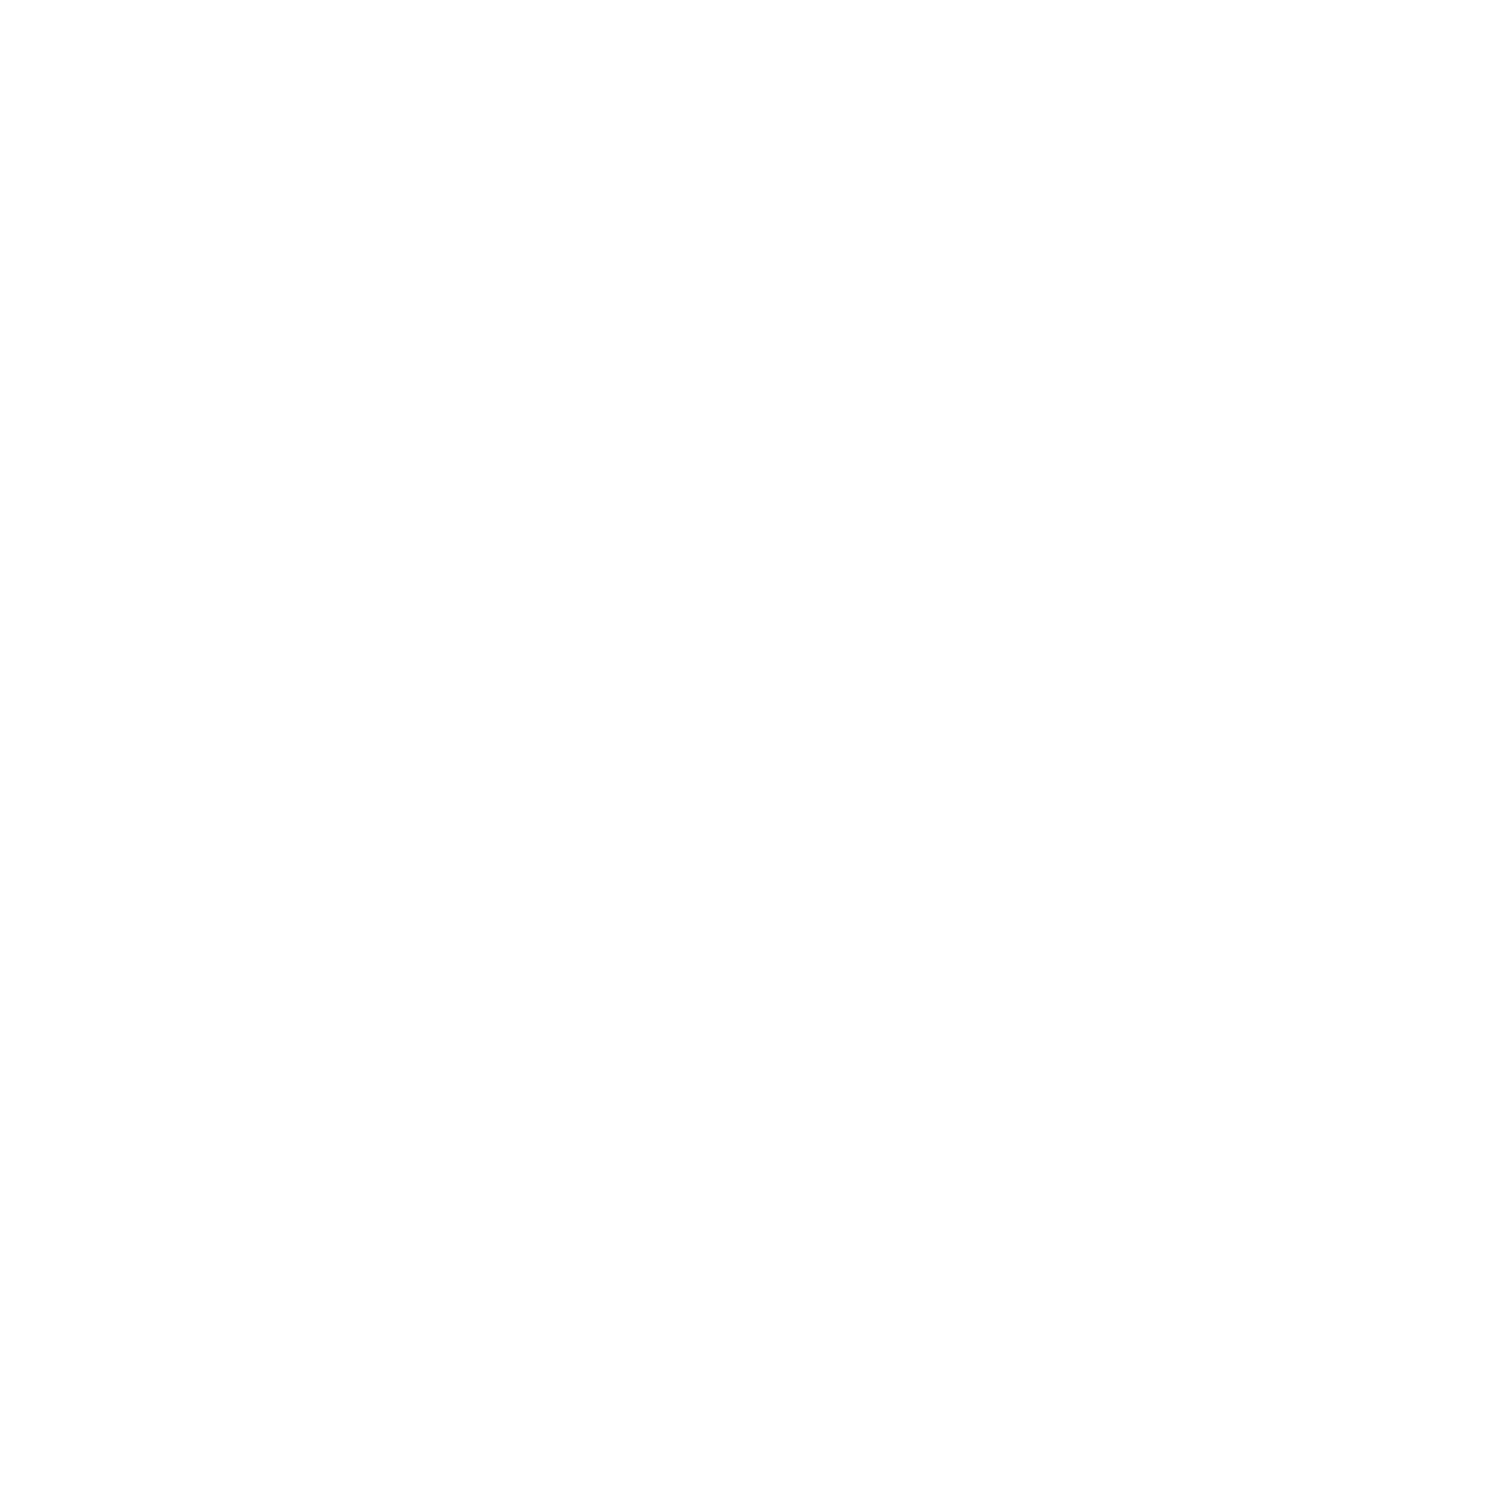 SyncsUp